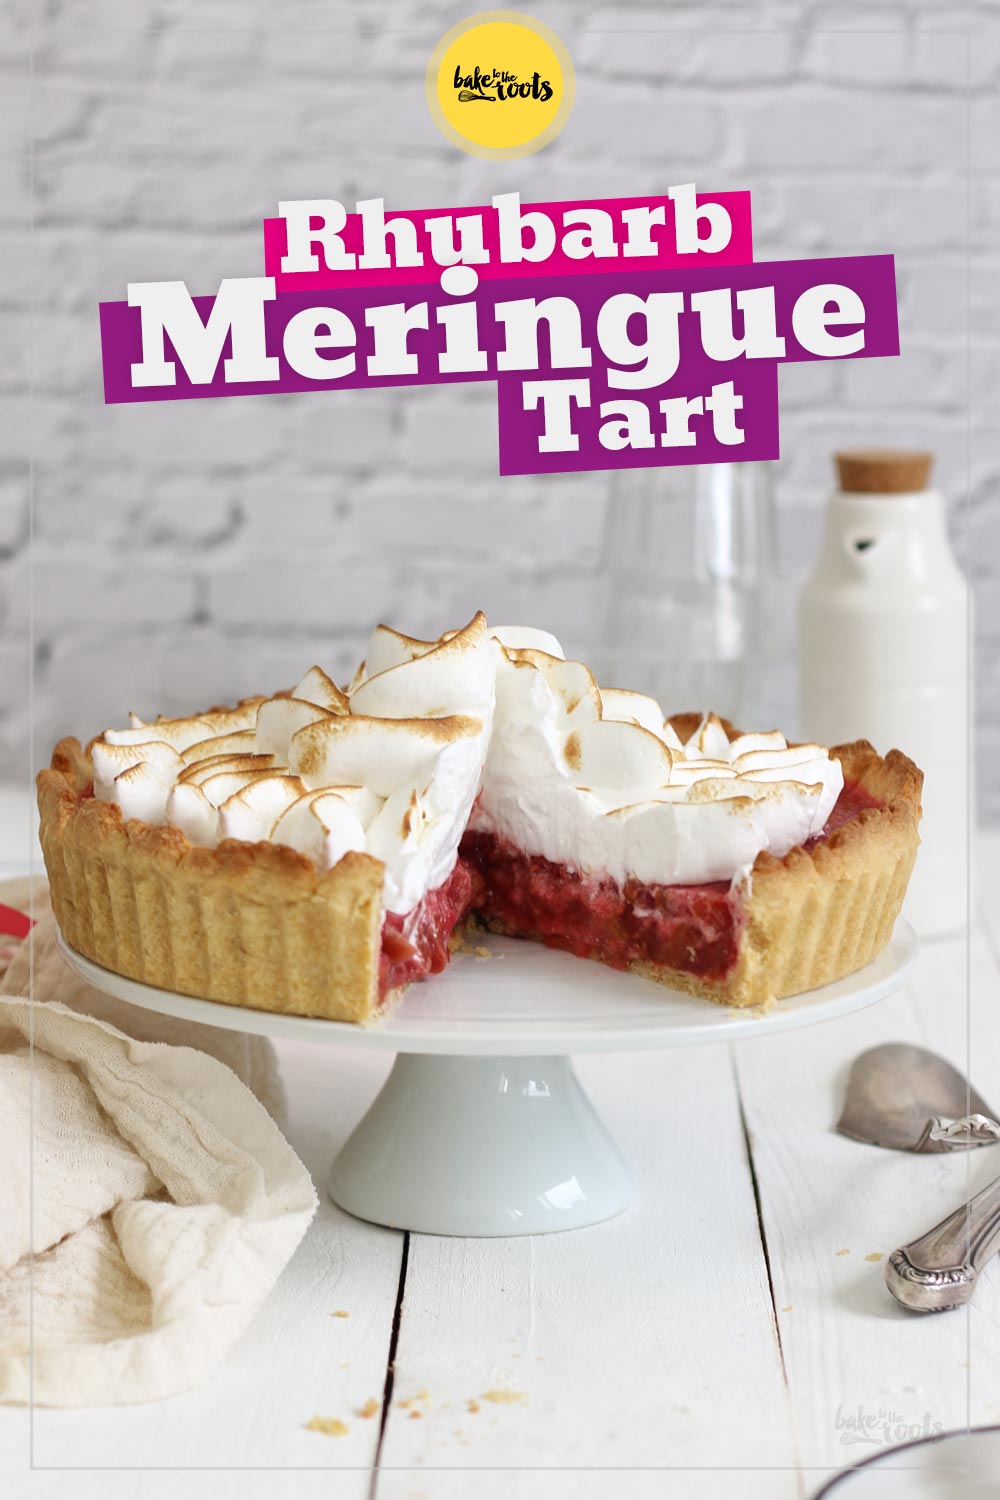 Rhubarb Meringue Tart | Bake to the roots